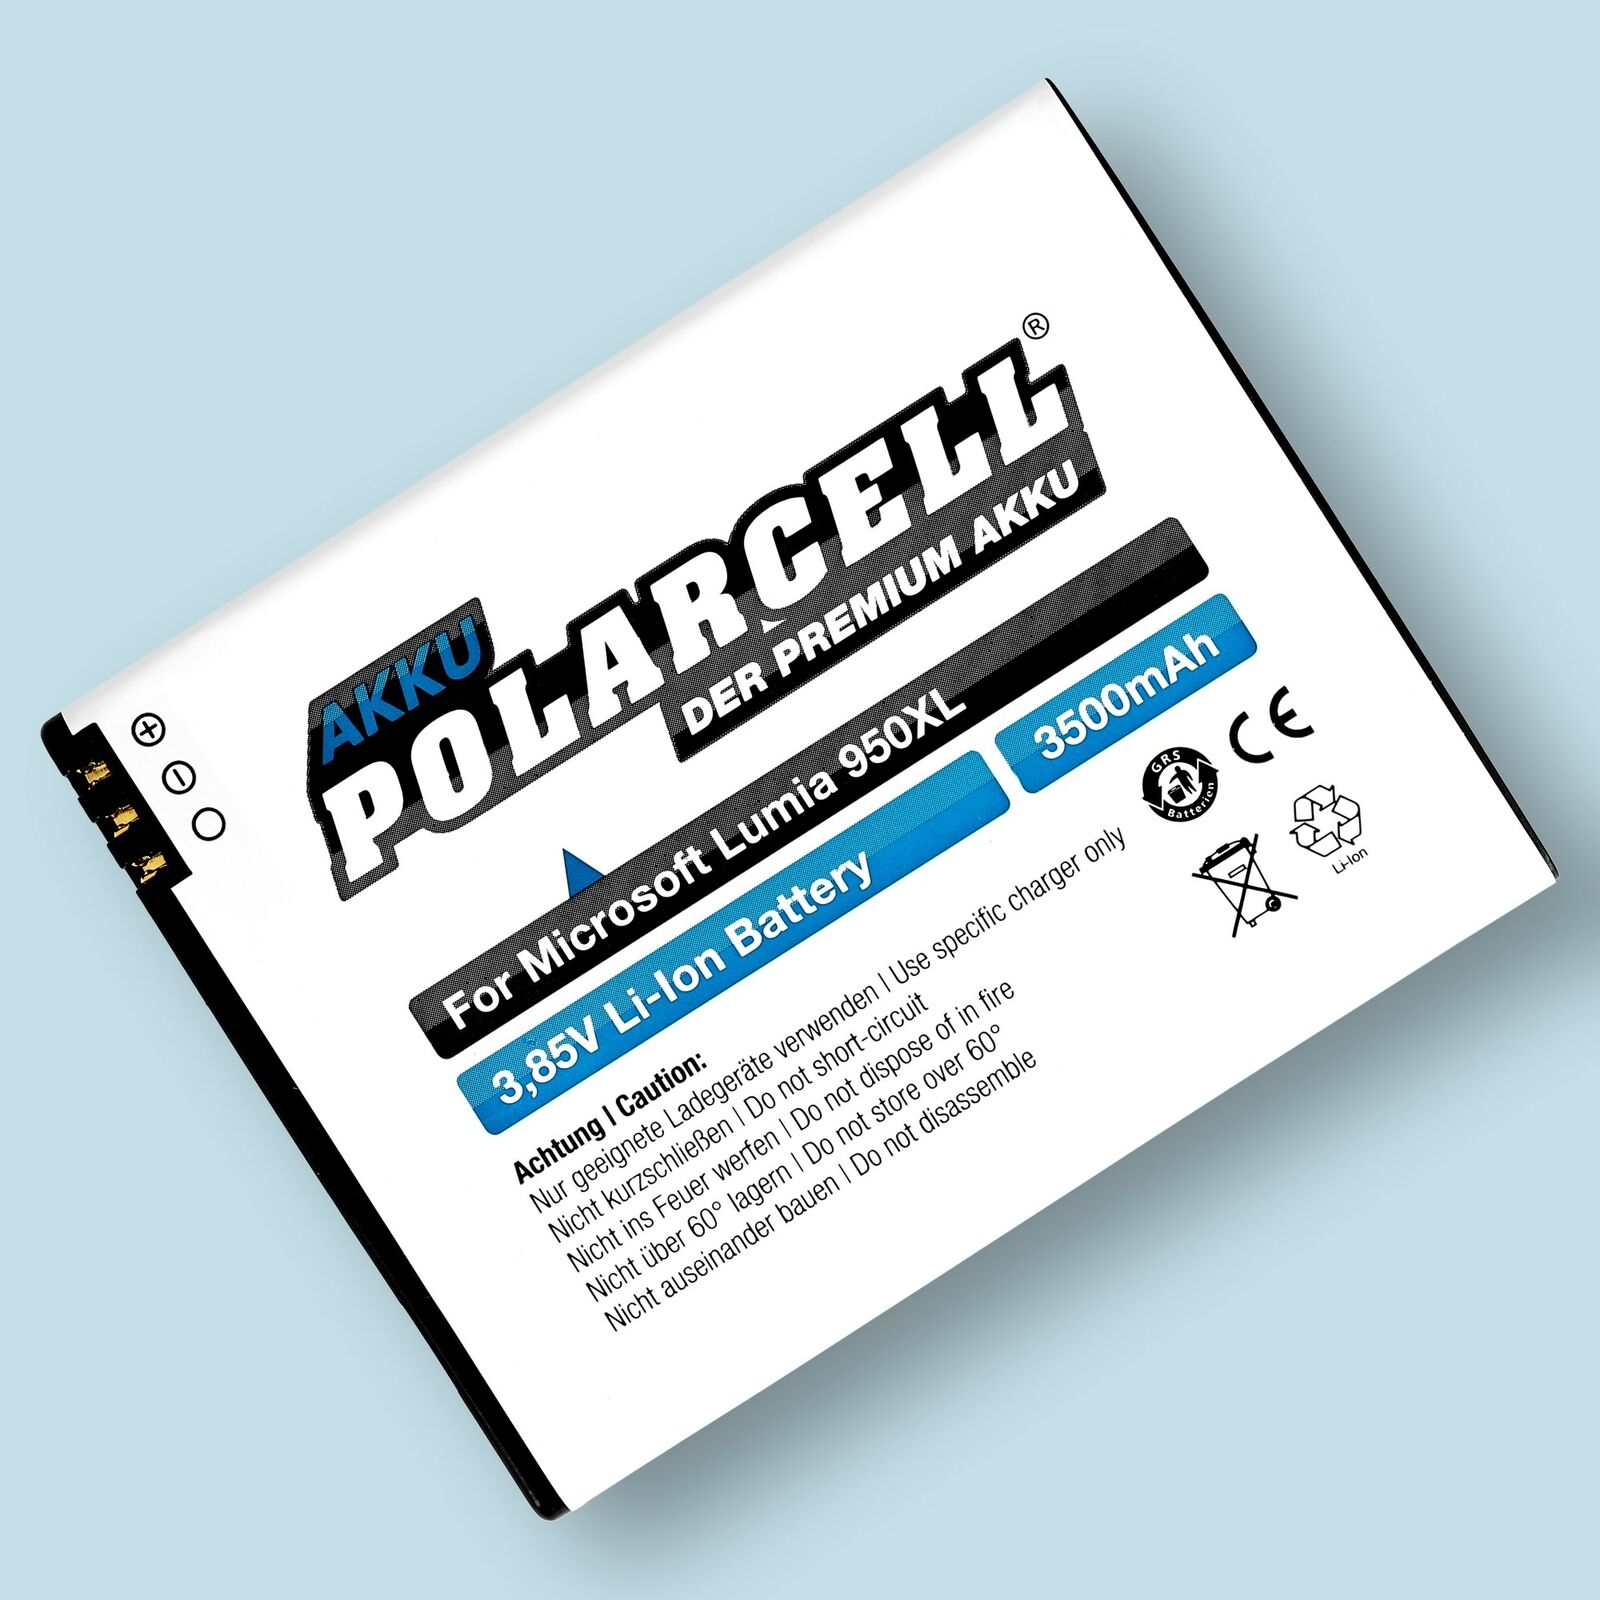 PolarCell battery